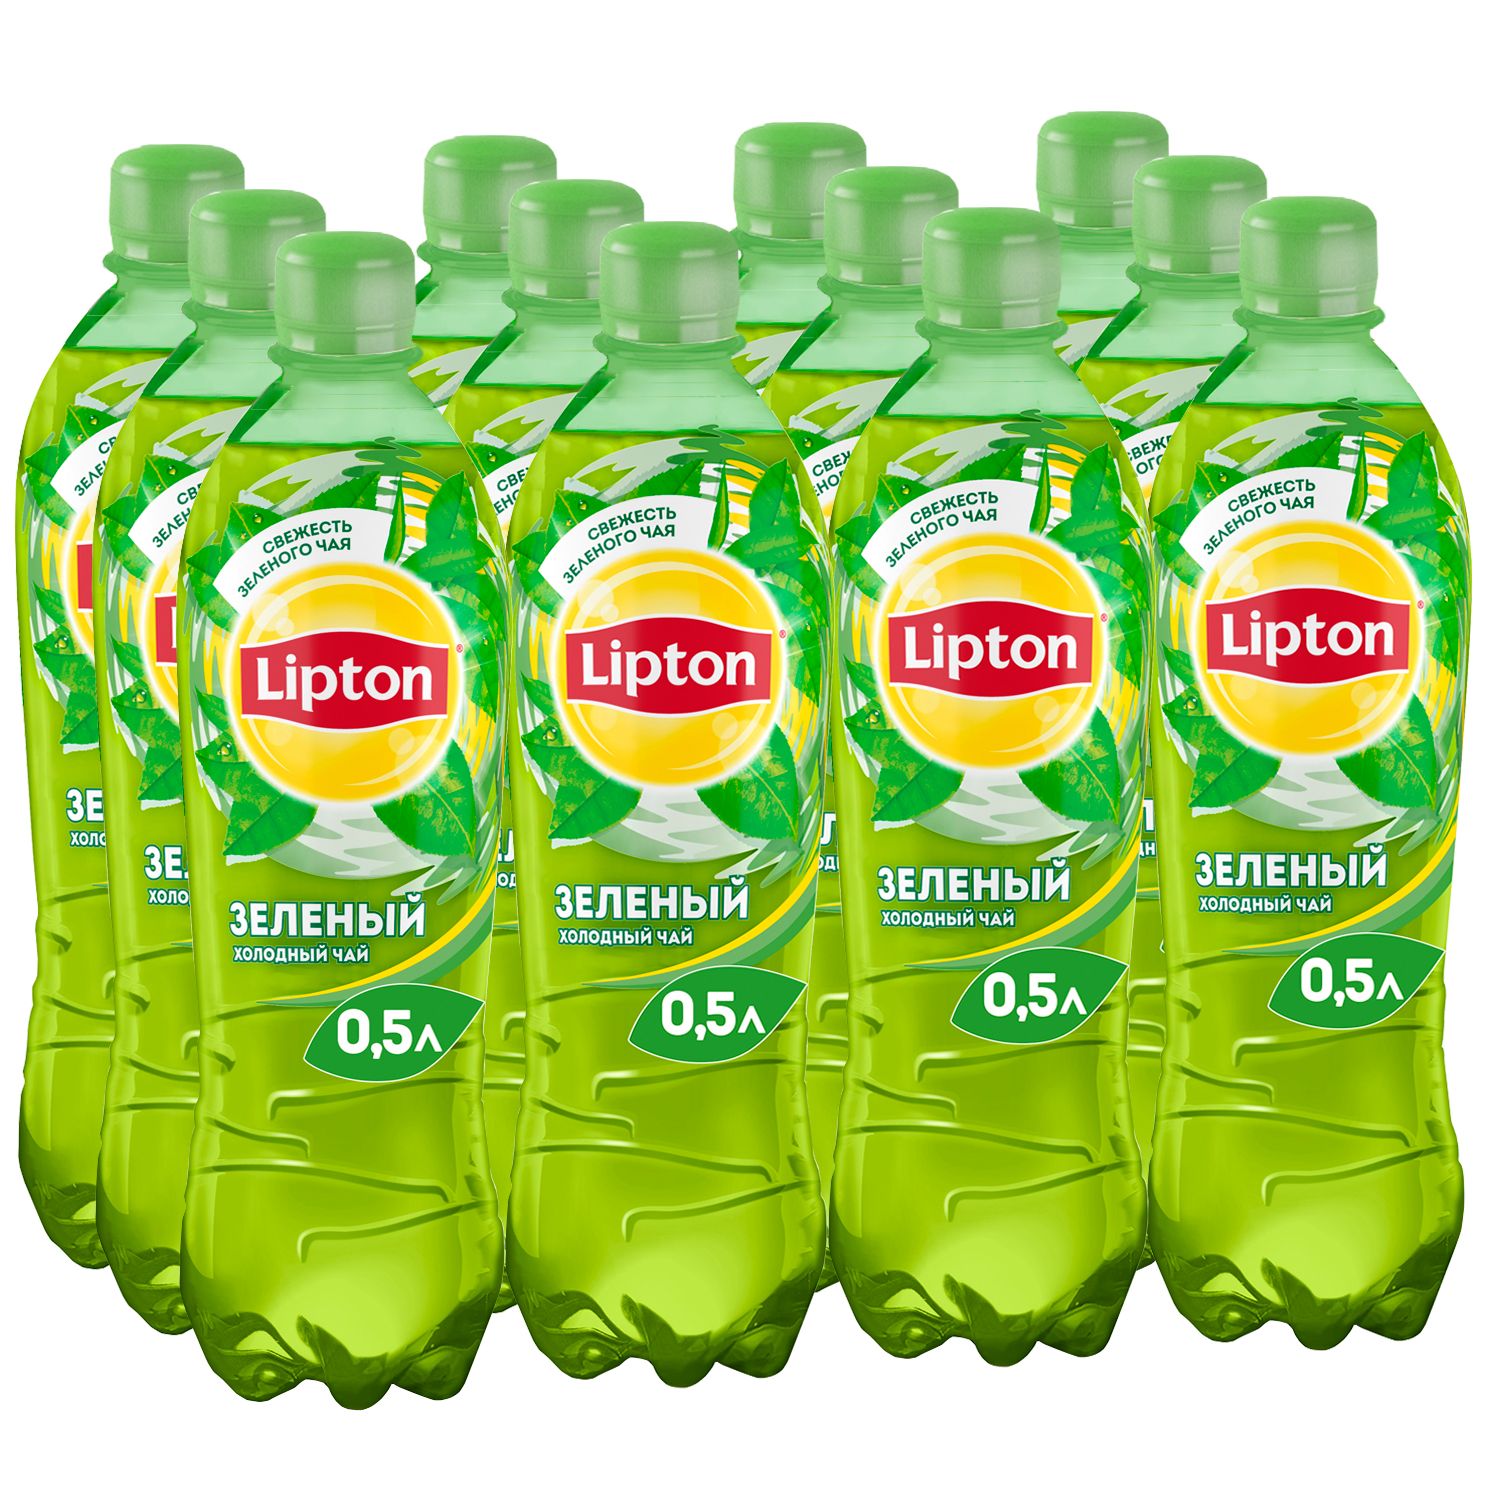 Бутылка зеленого липтона. Липтон 0,5 зеленый. Липтон зеленый чай 0.5. Липтон зелёный холодный чай. Зеленый Липтон зеленый Липтон.